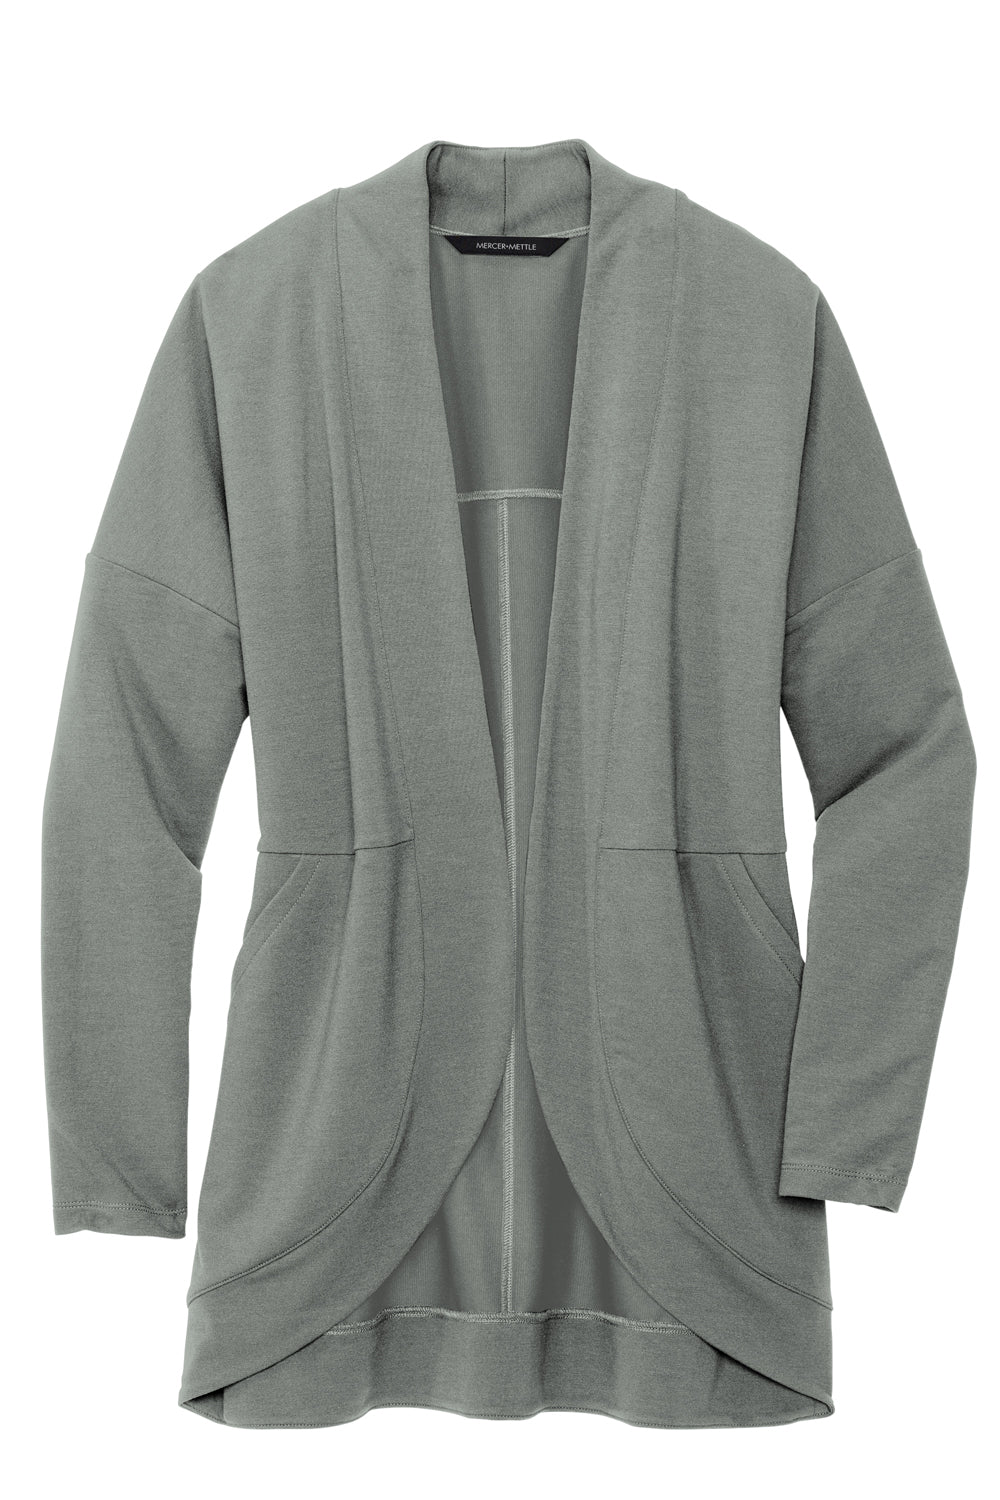 Mercer+Mettle MM3015 Stretch Open Front Long Sleeve Cardigan Sweater Gusty Grey Flat Front